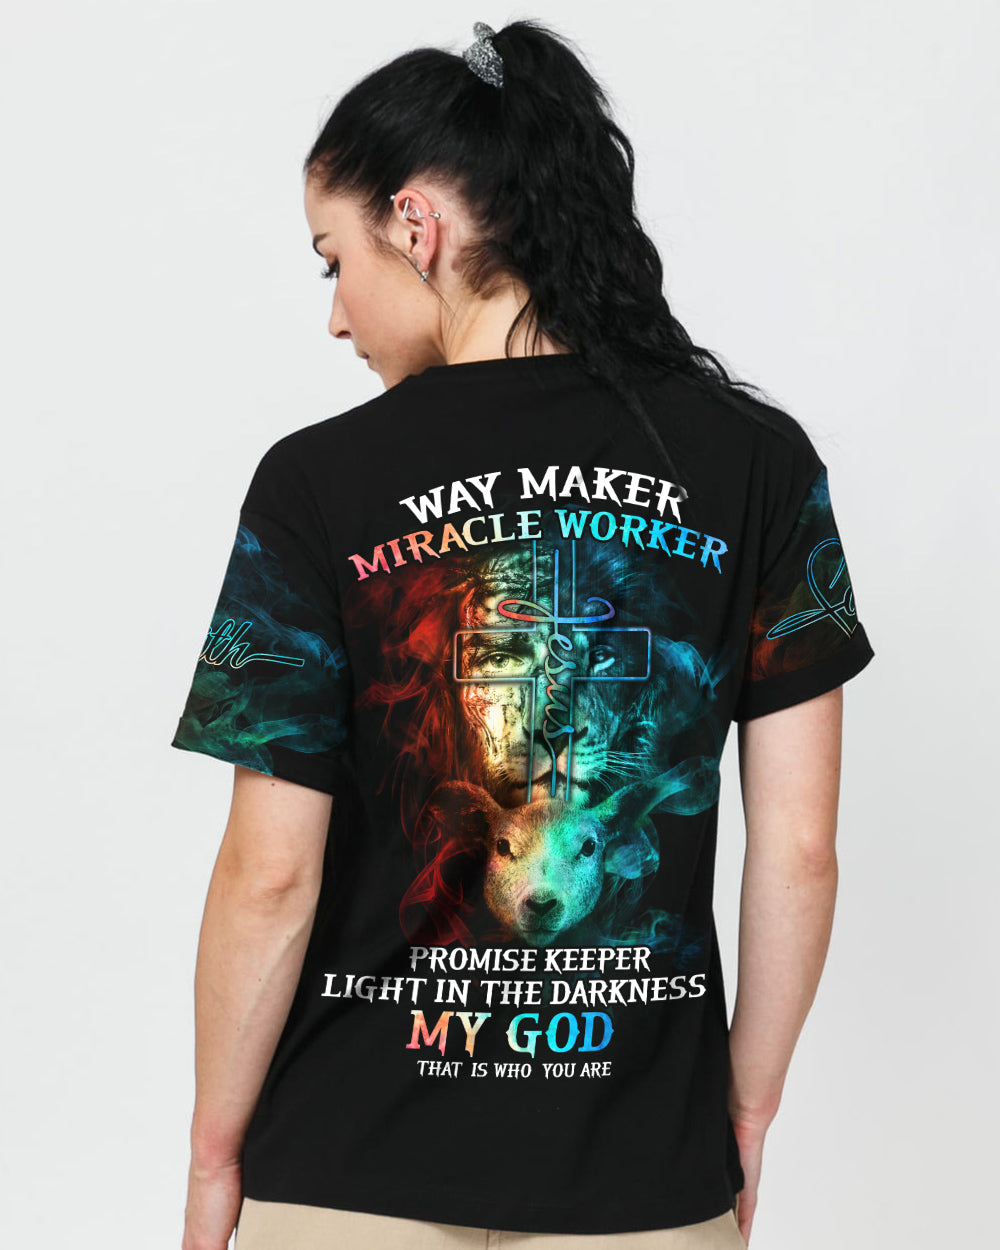 Way Maker Miracle Worker Jesus Lion Lamb Women's Christian Tshirt